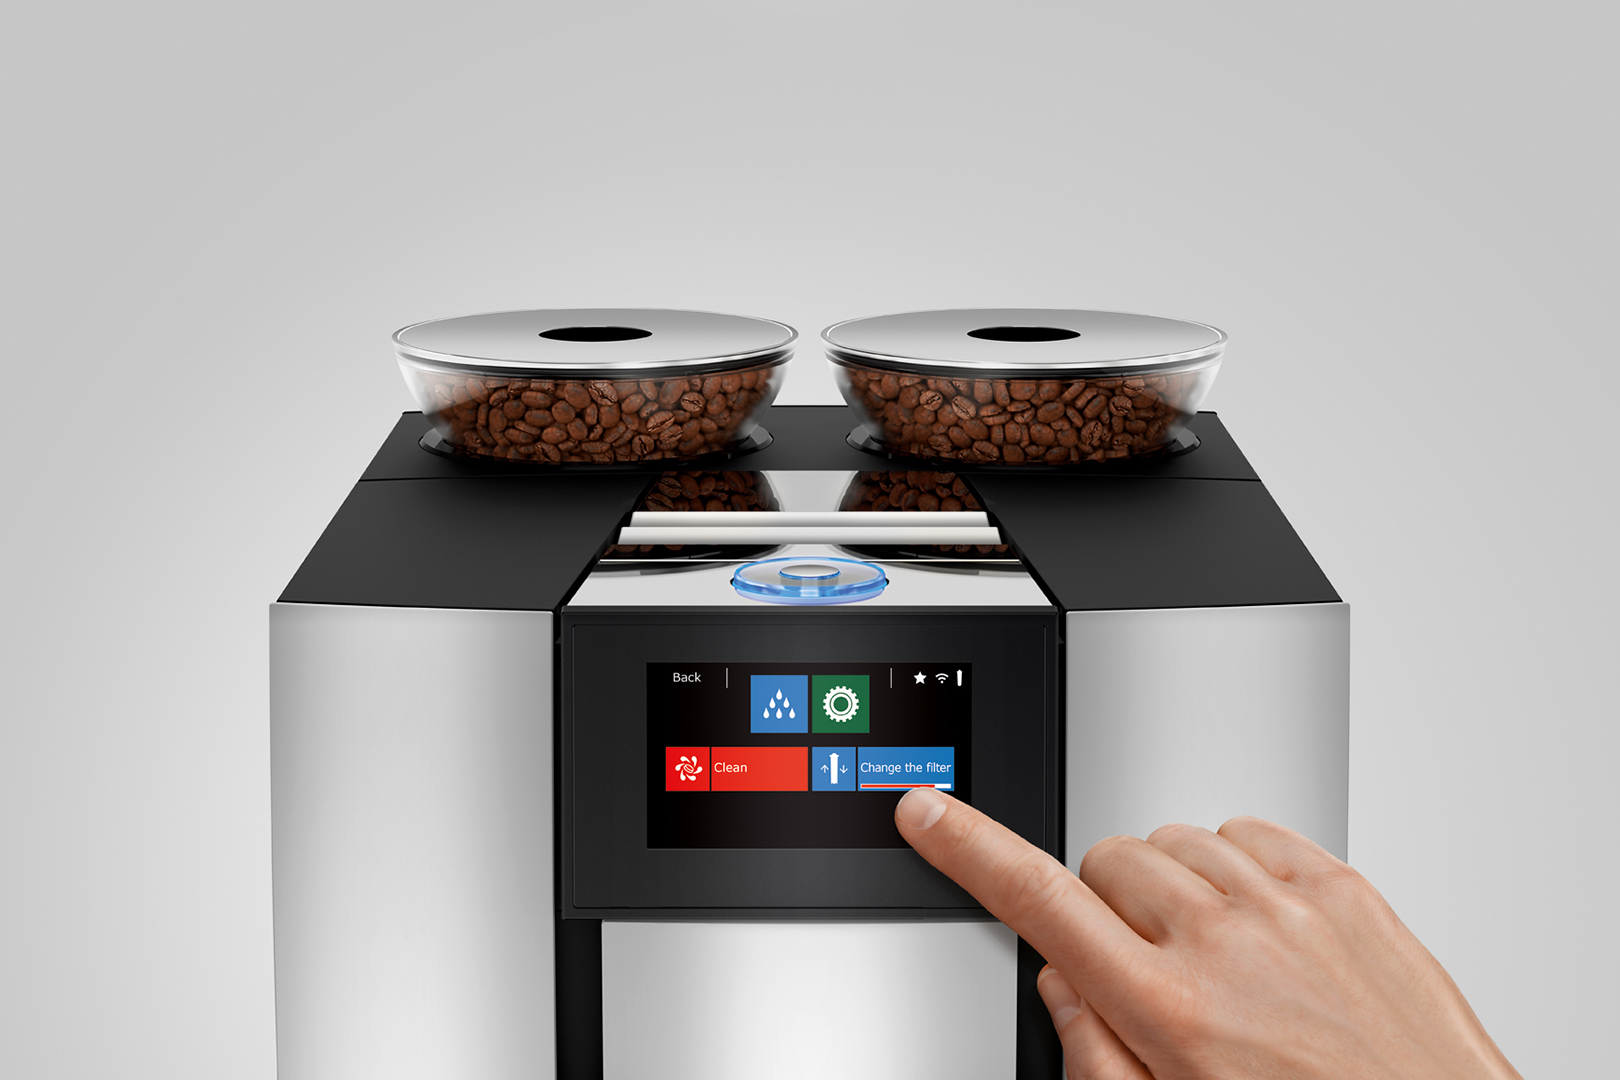 Jura Giga 6 Super Premium Superautomatic Espresso Machine